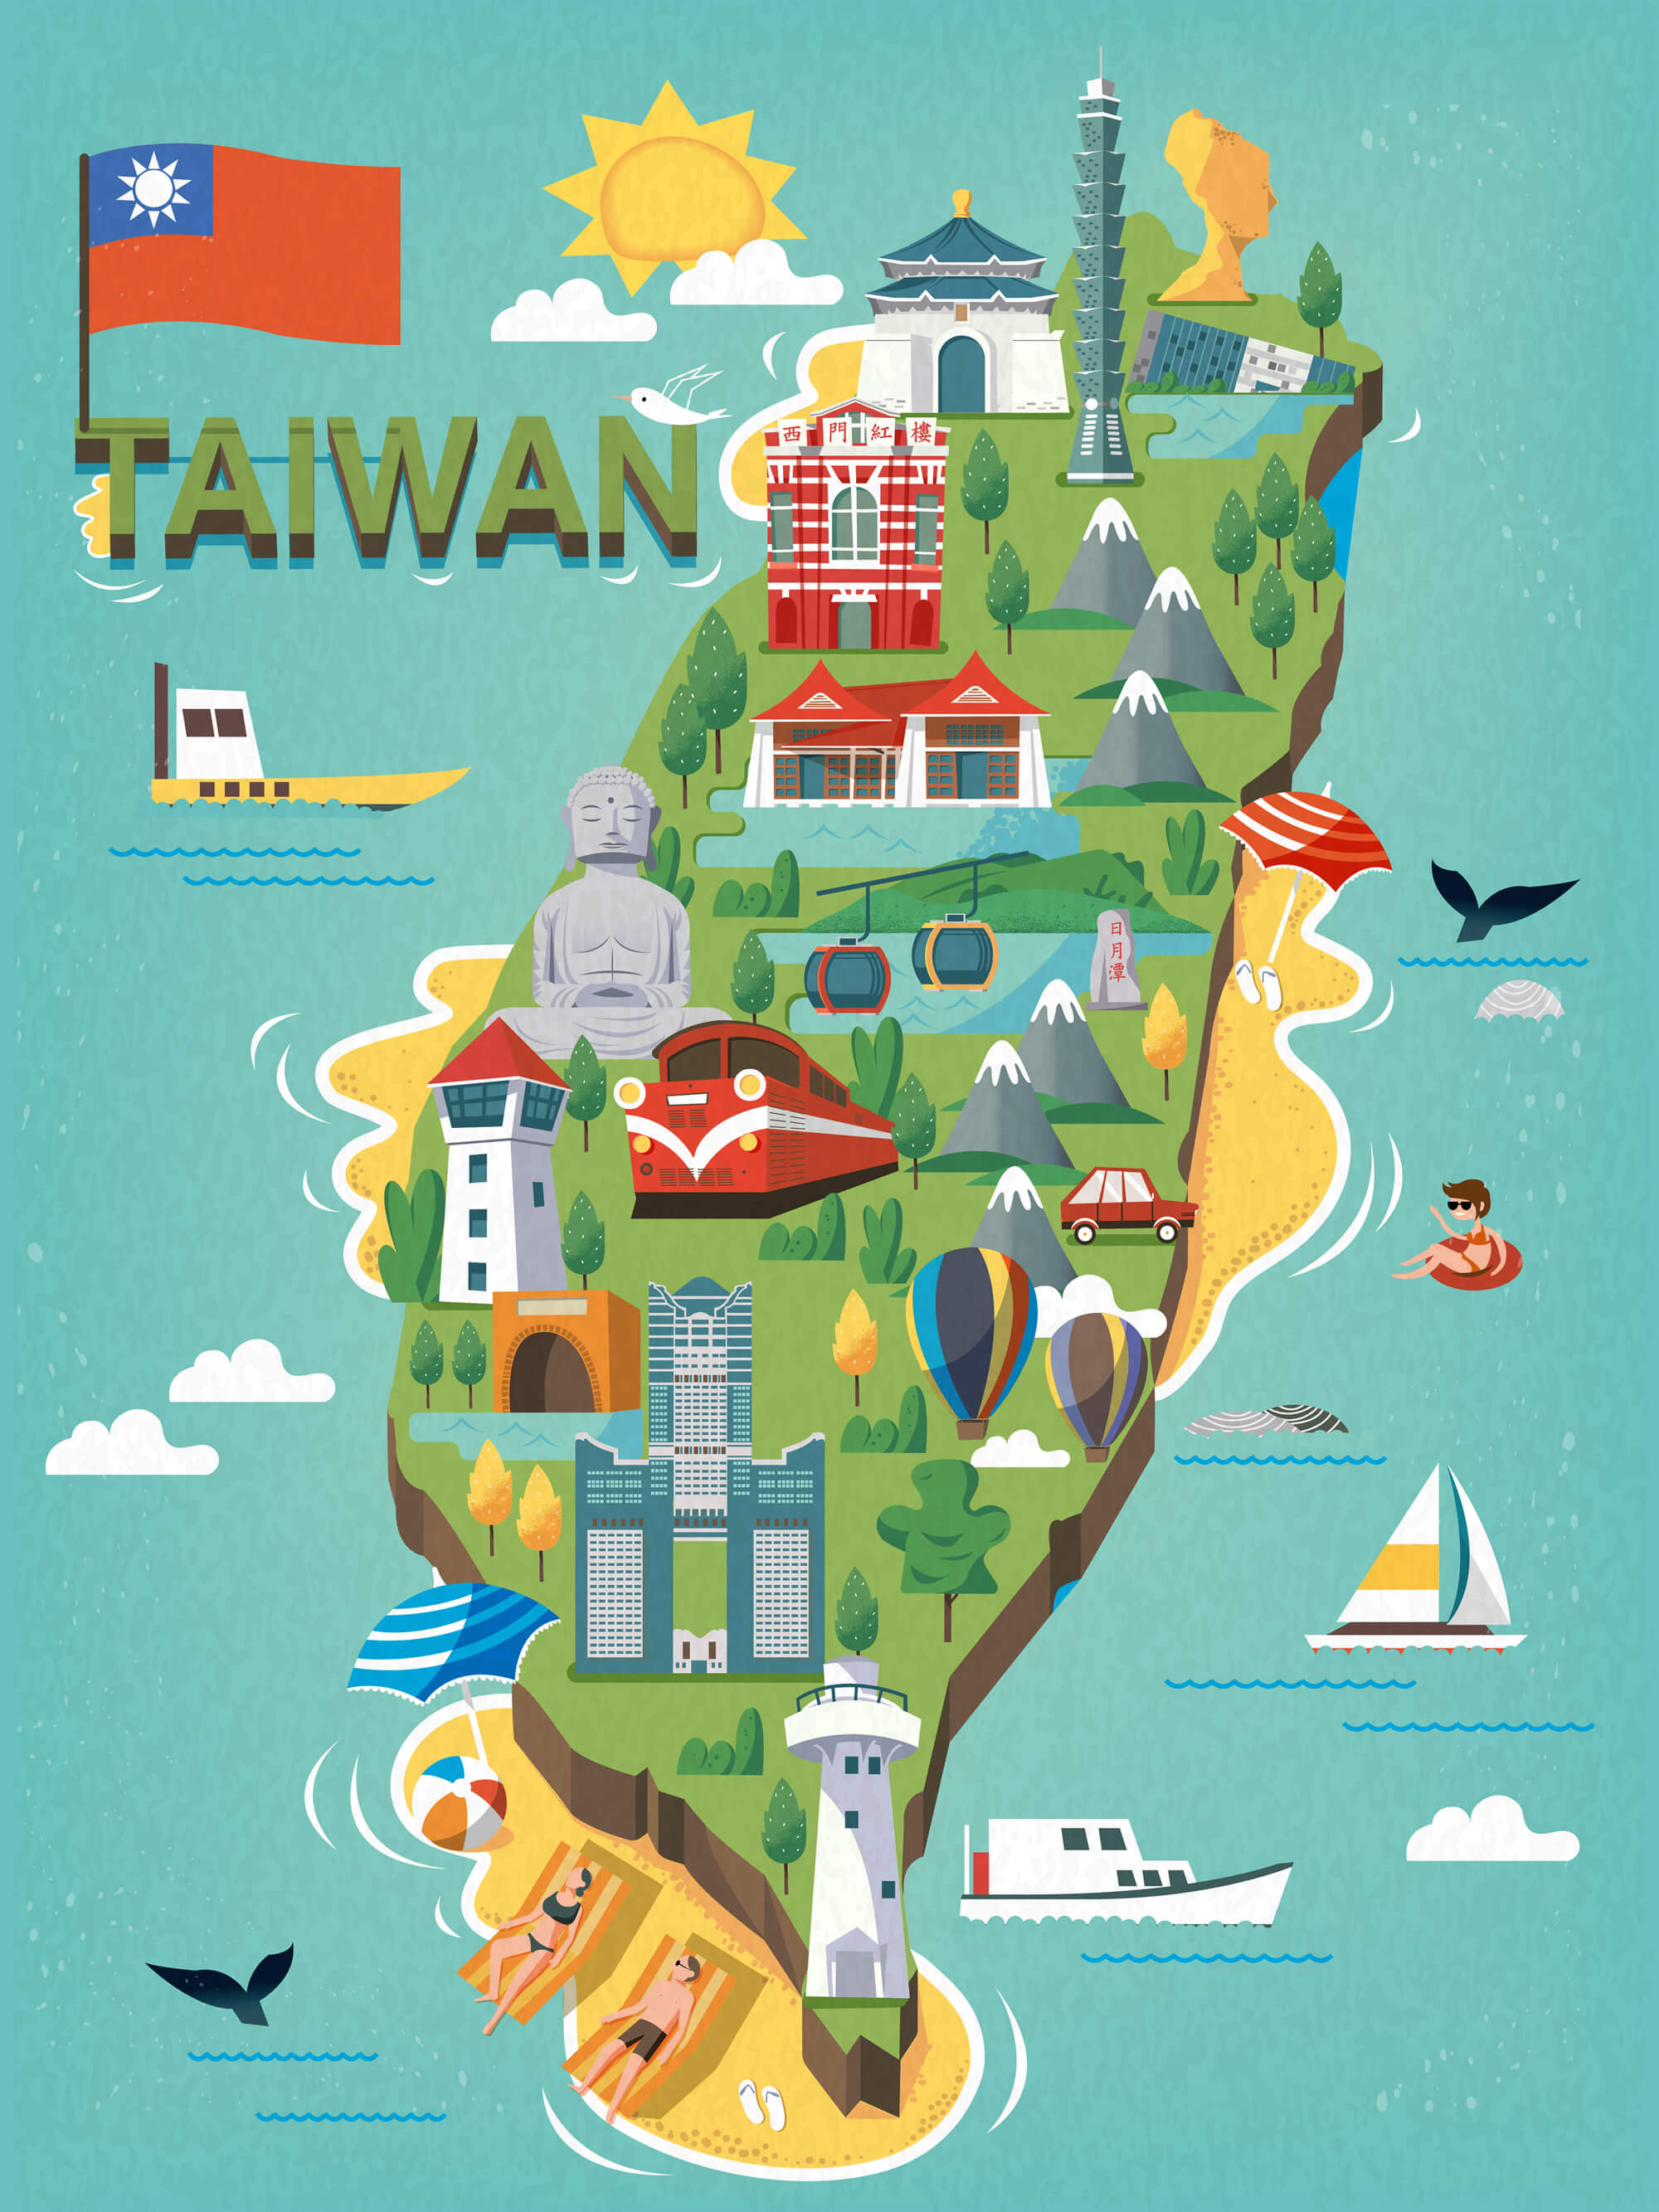 Taiwan Travel Map